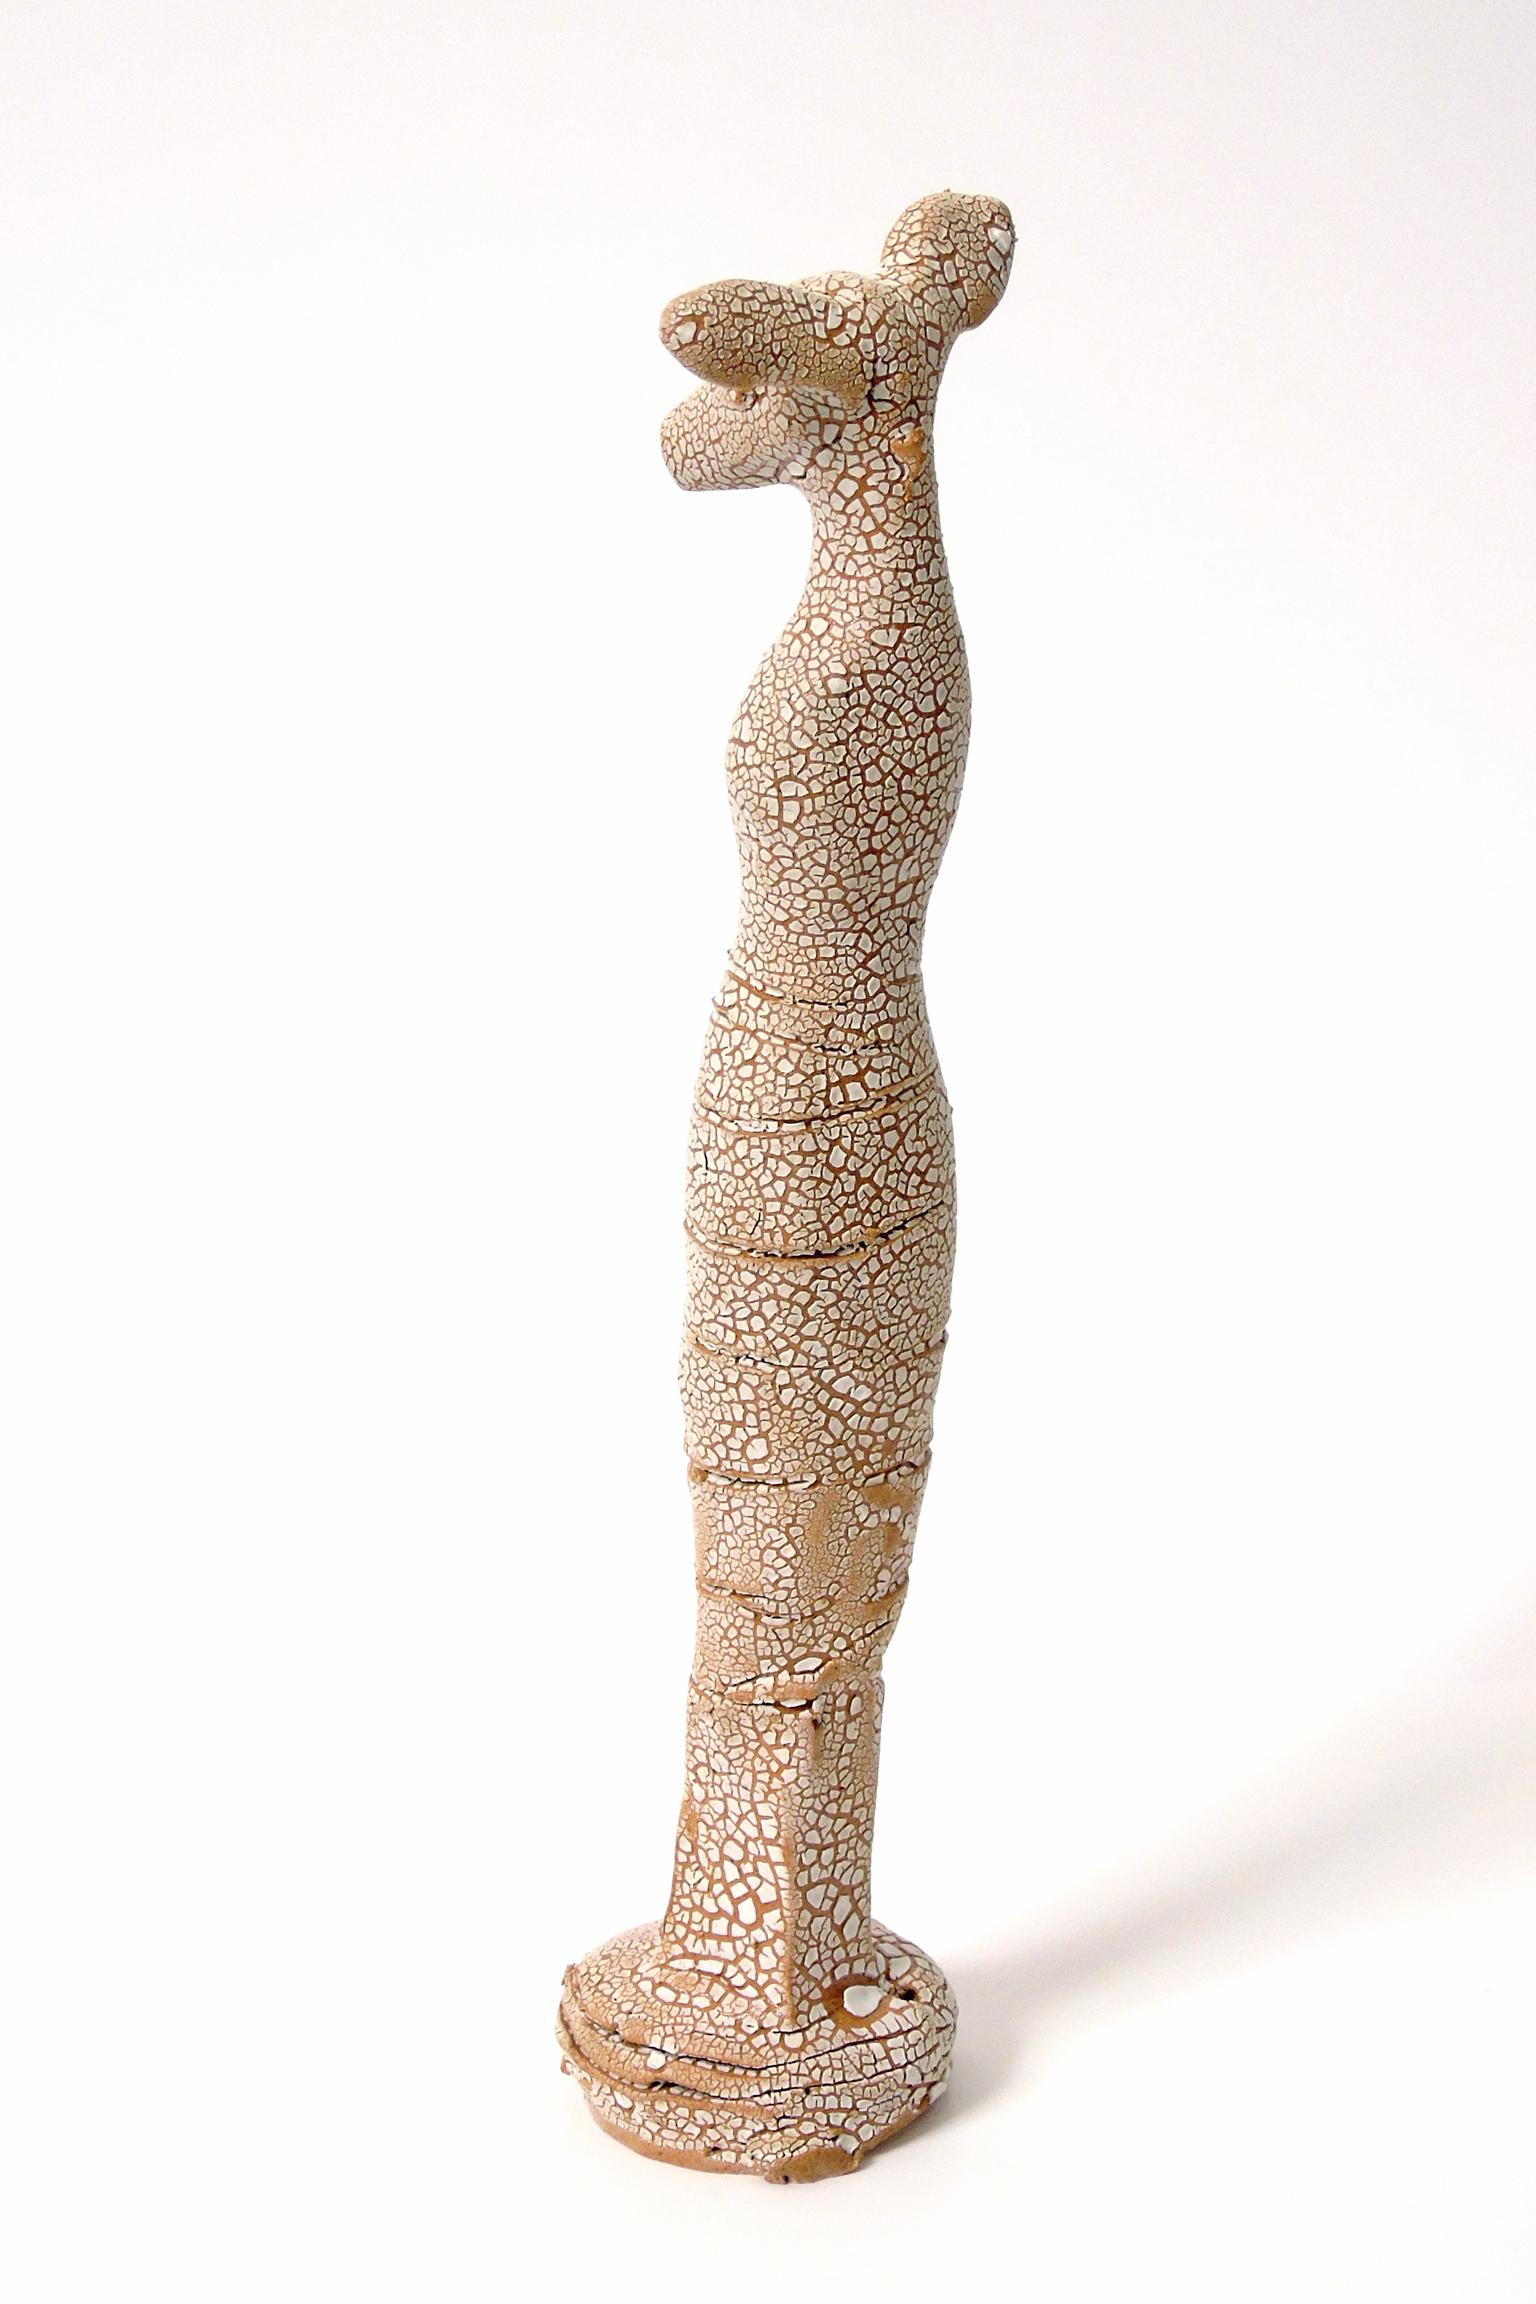 Tiny Deer Totem -95 - Beige Figurative Sculpture by Robin Whiteman